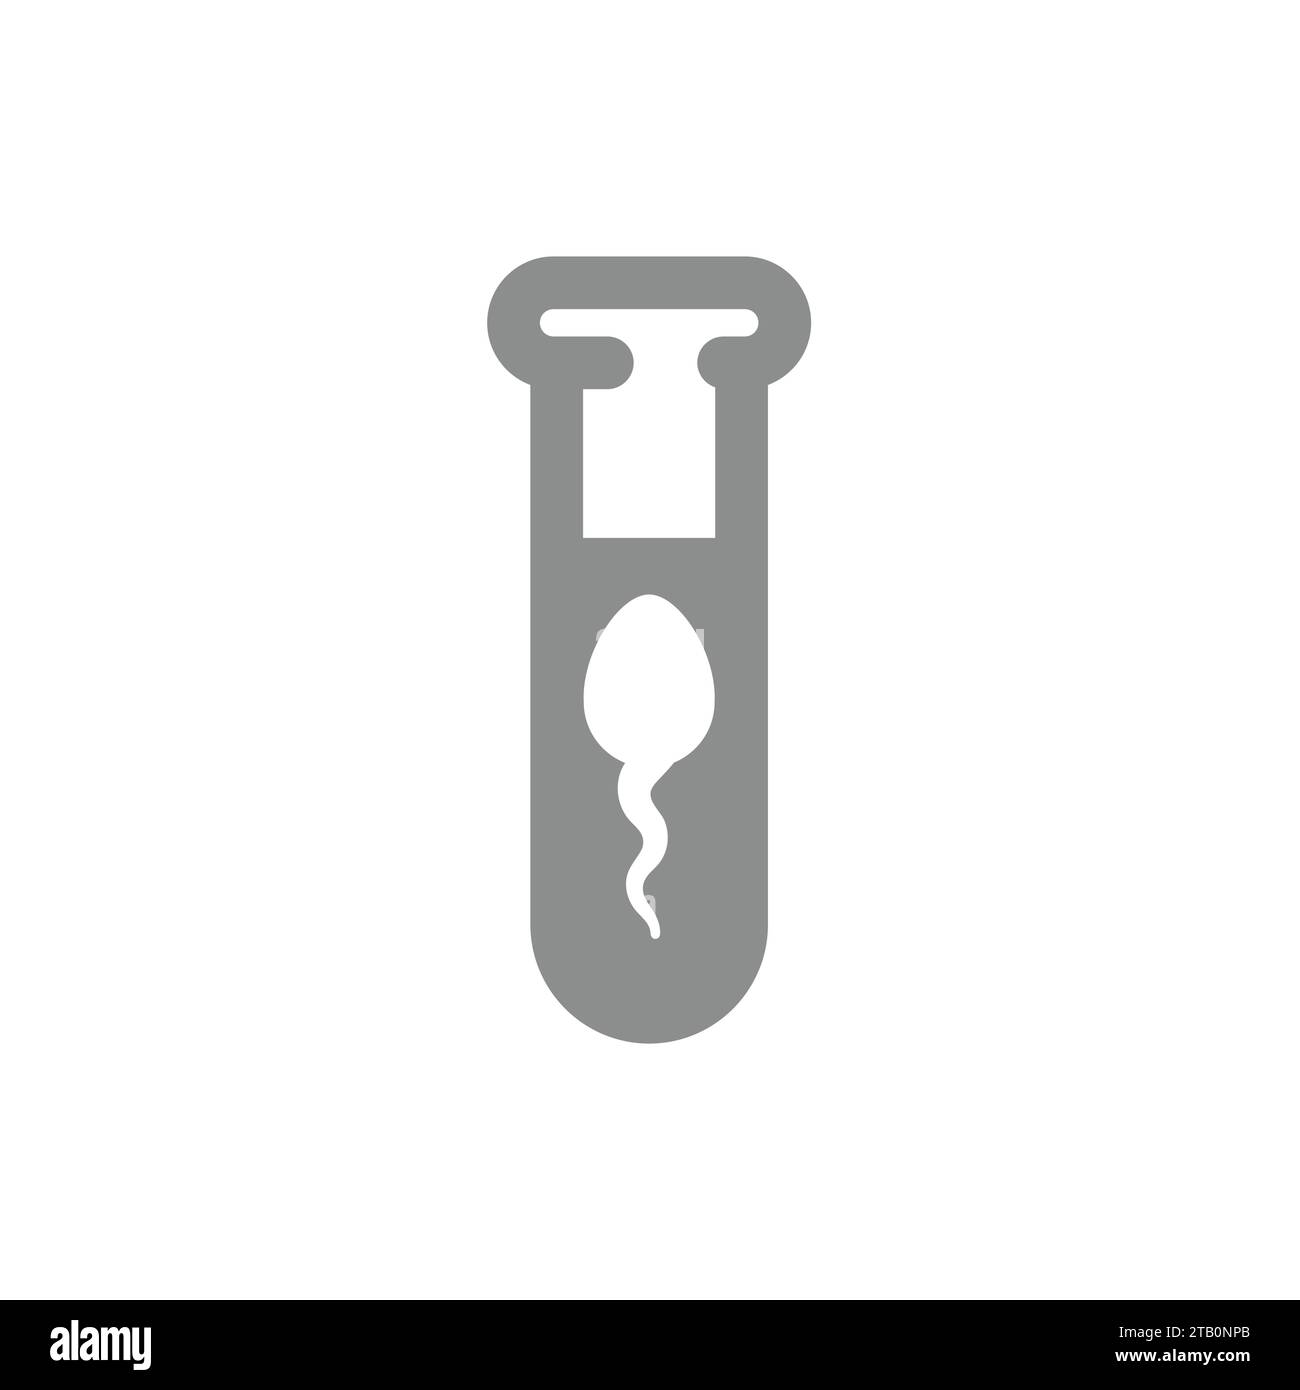 Sperm or spermatozoon in test tube vector icon. In vitro fertilization, lab flask and spermatozoa symbol. Stock Vector